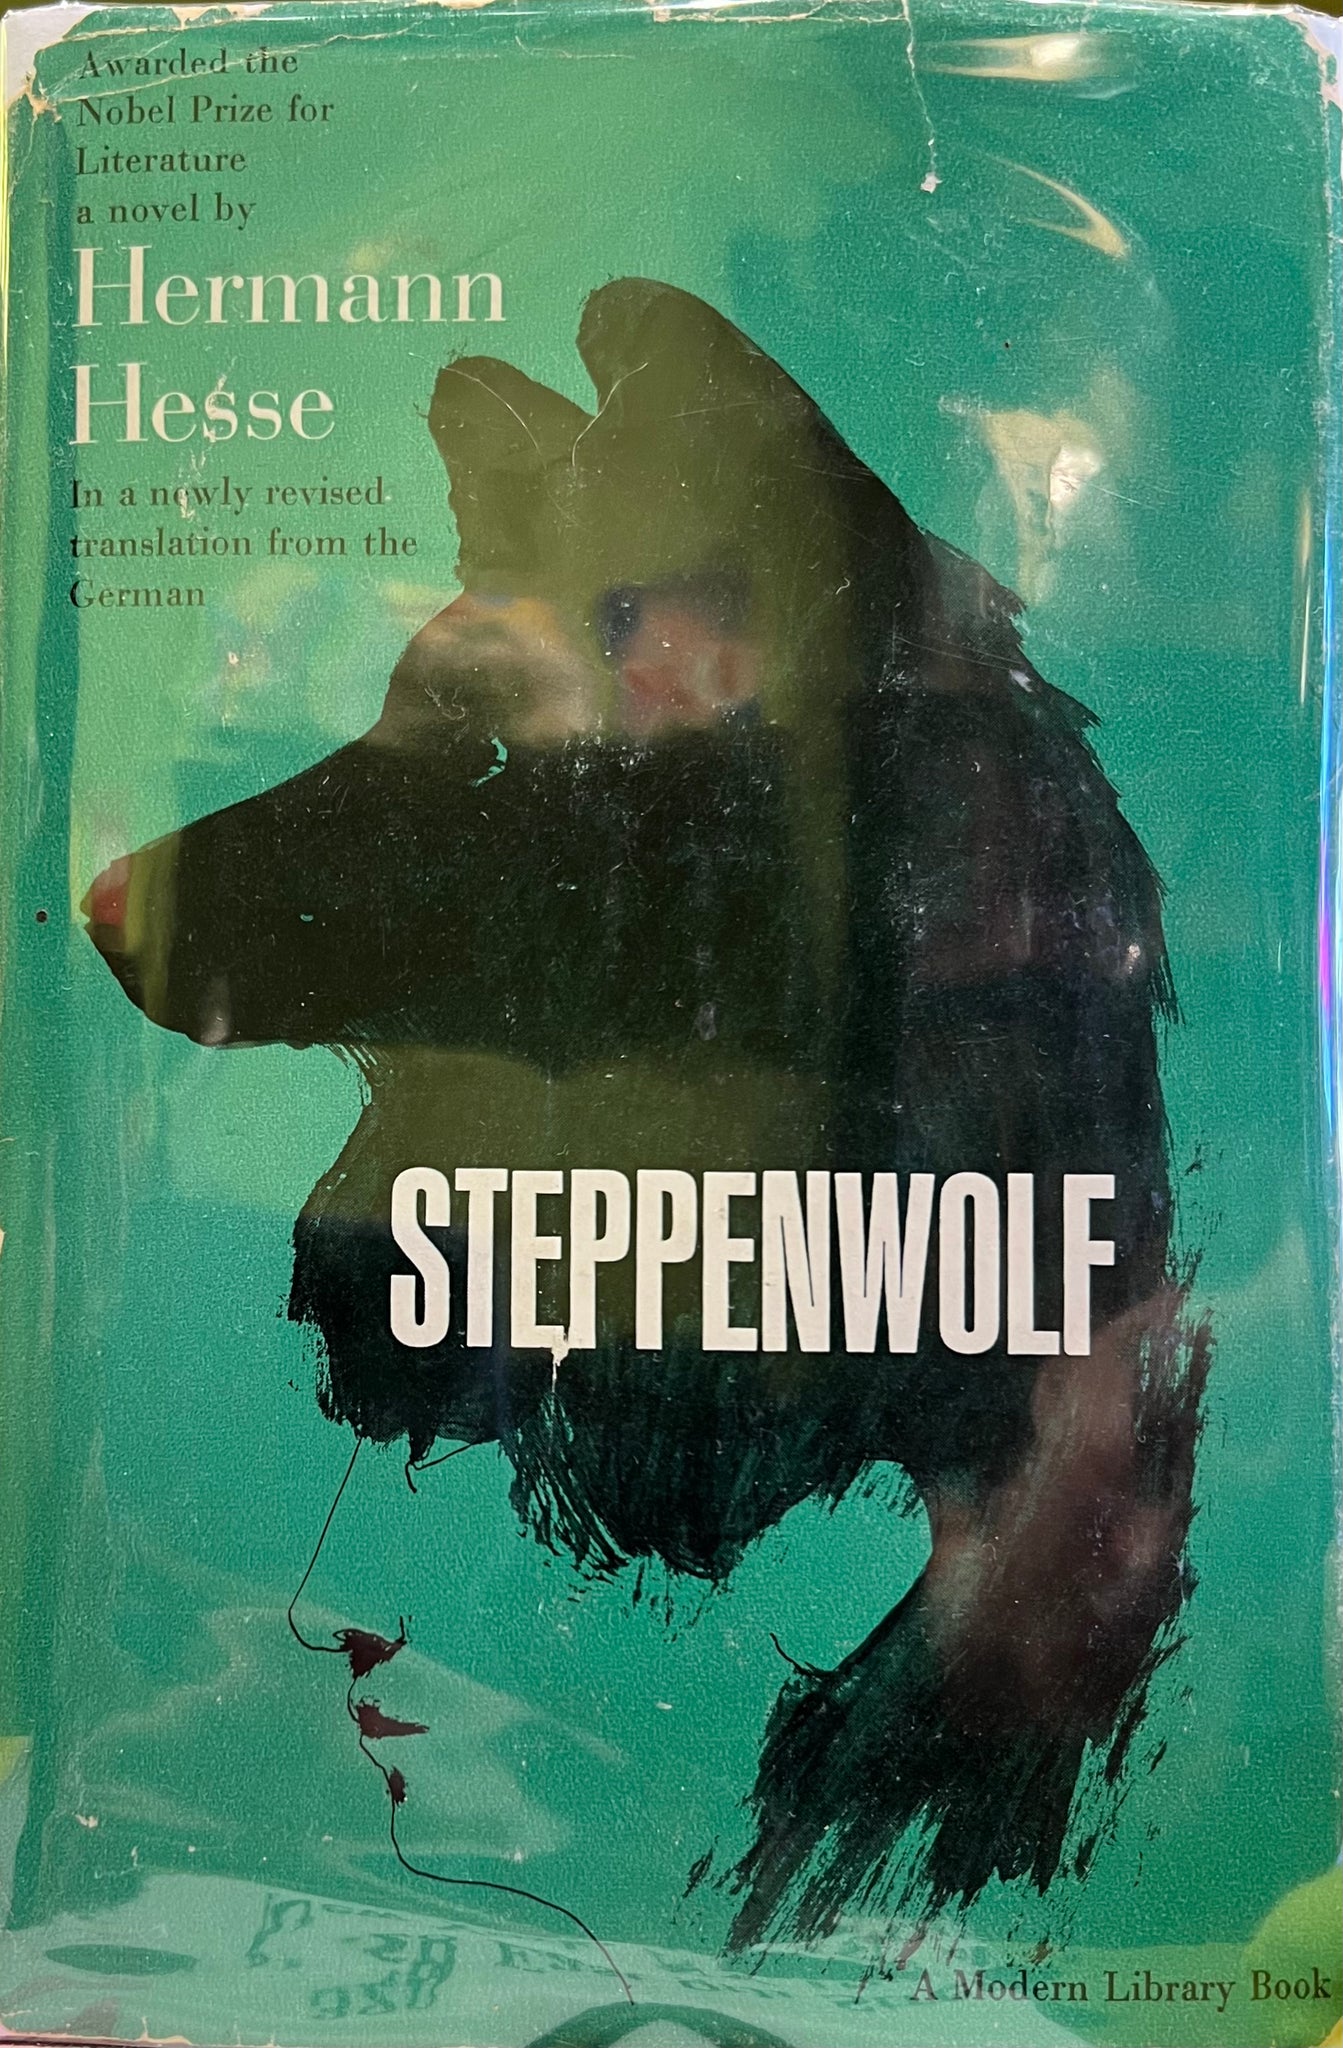 Steppenwolf, Herman Hesse